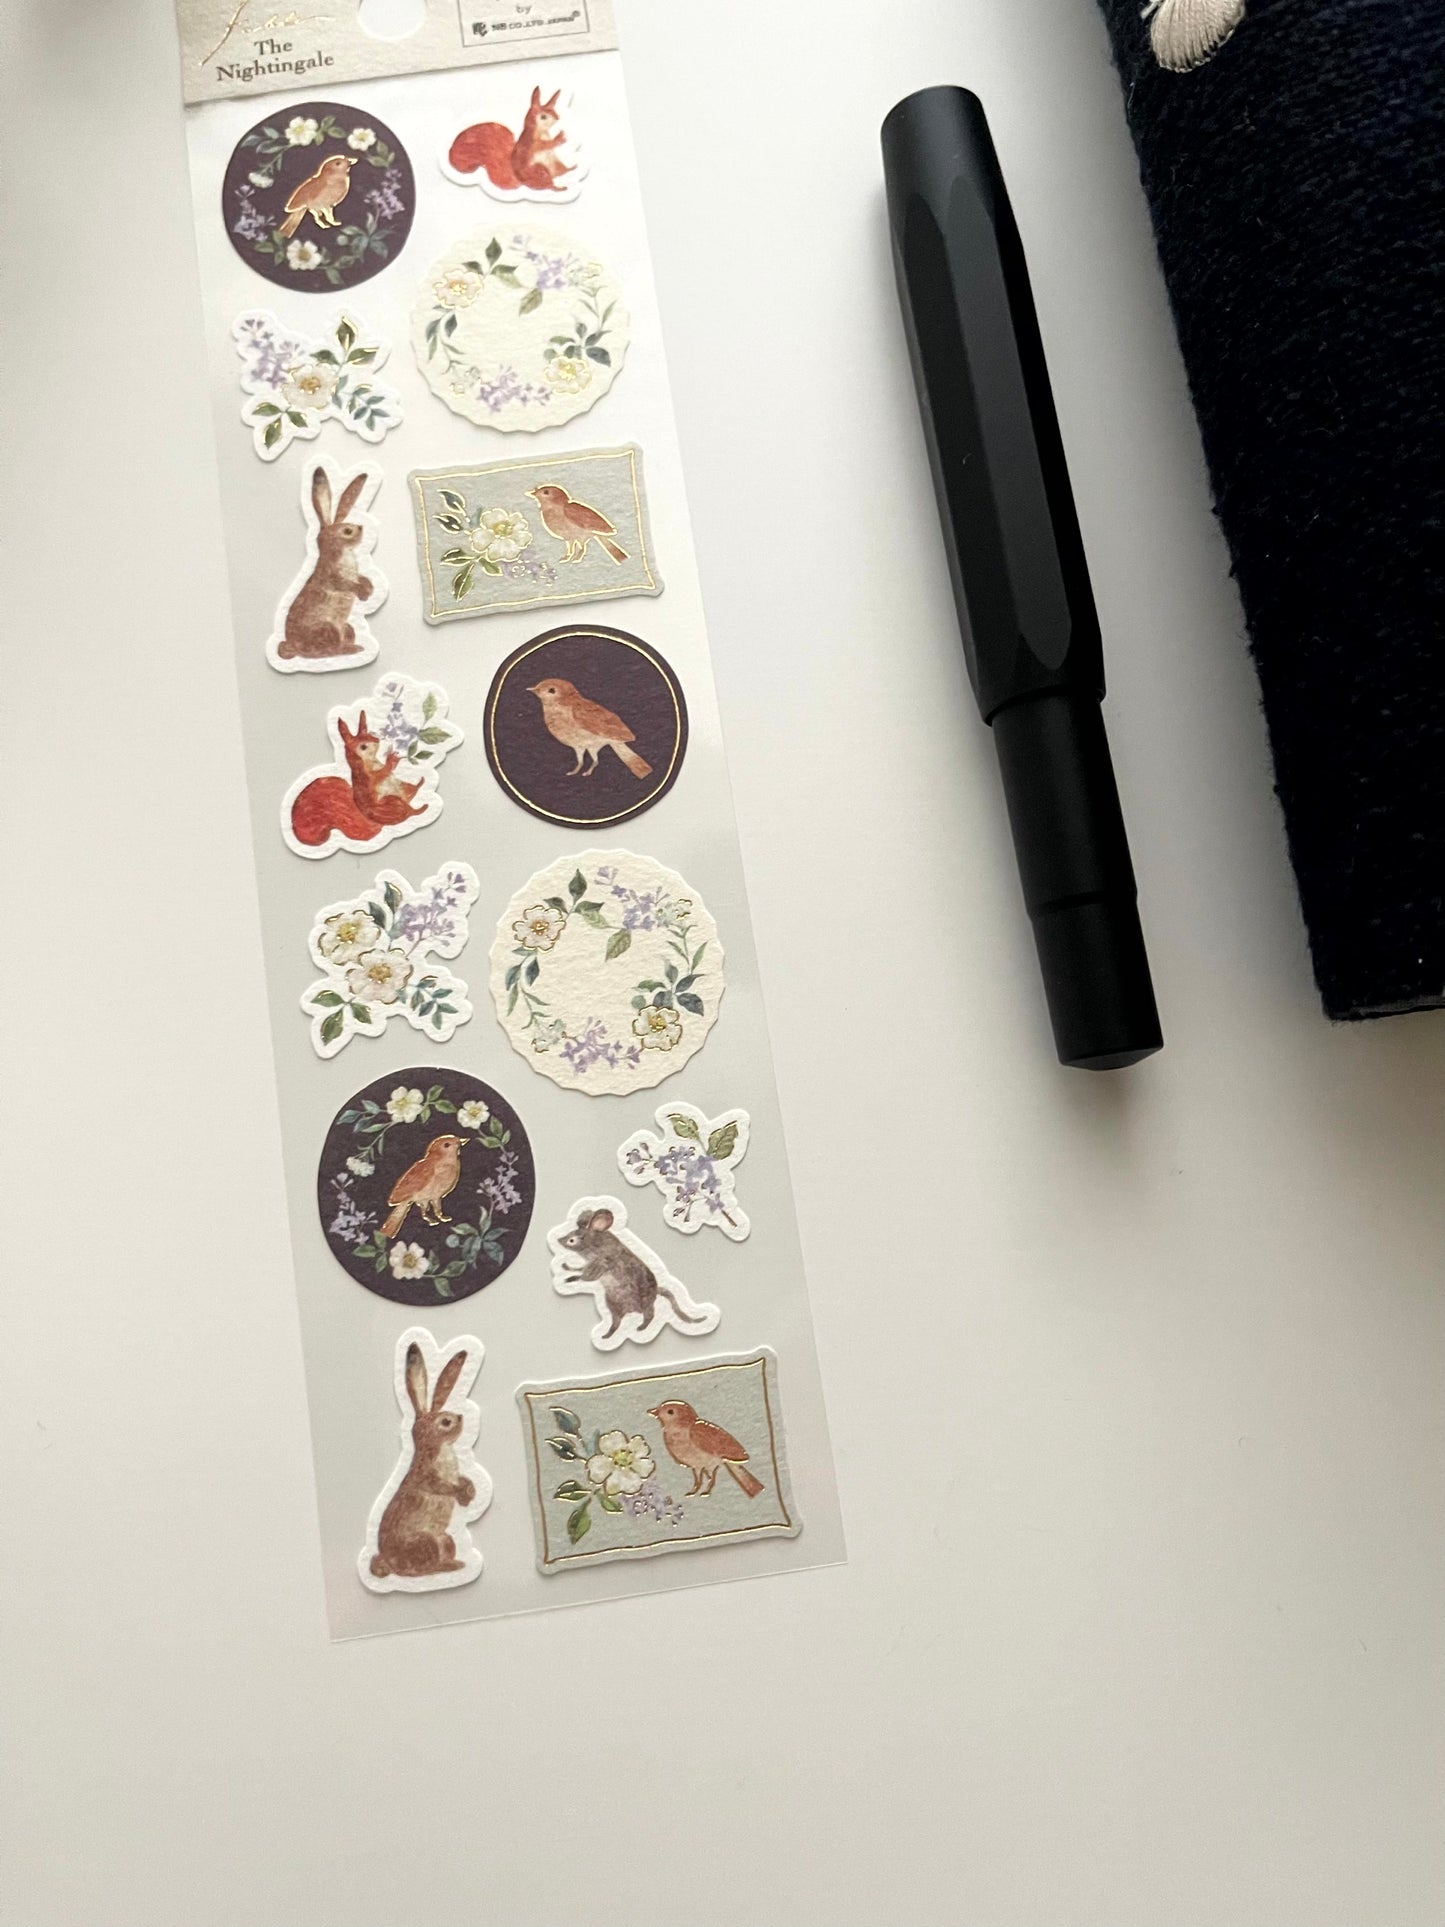 The Nightingale Mino Stickers